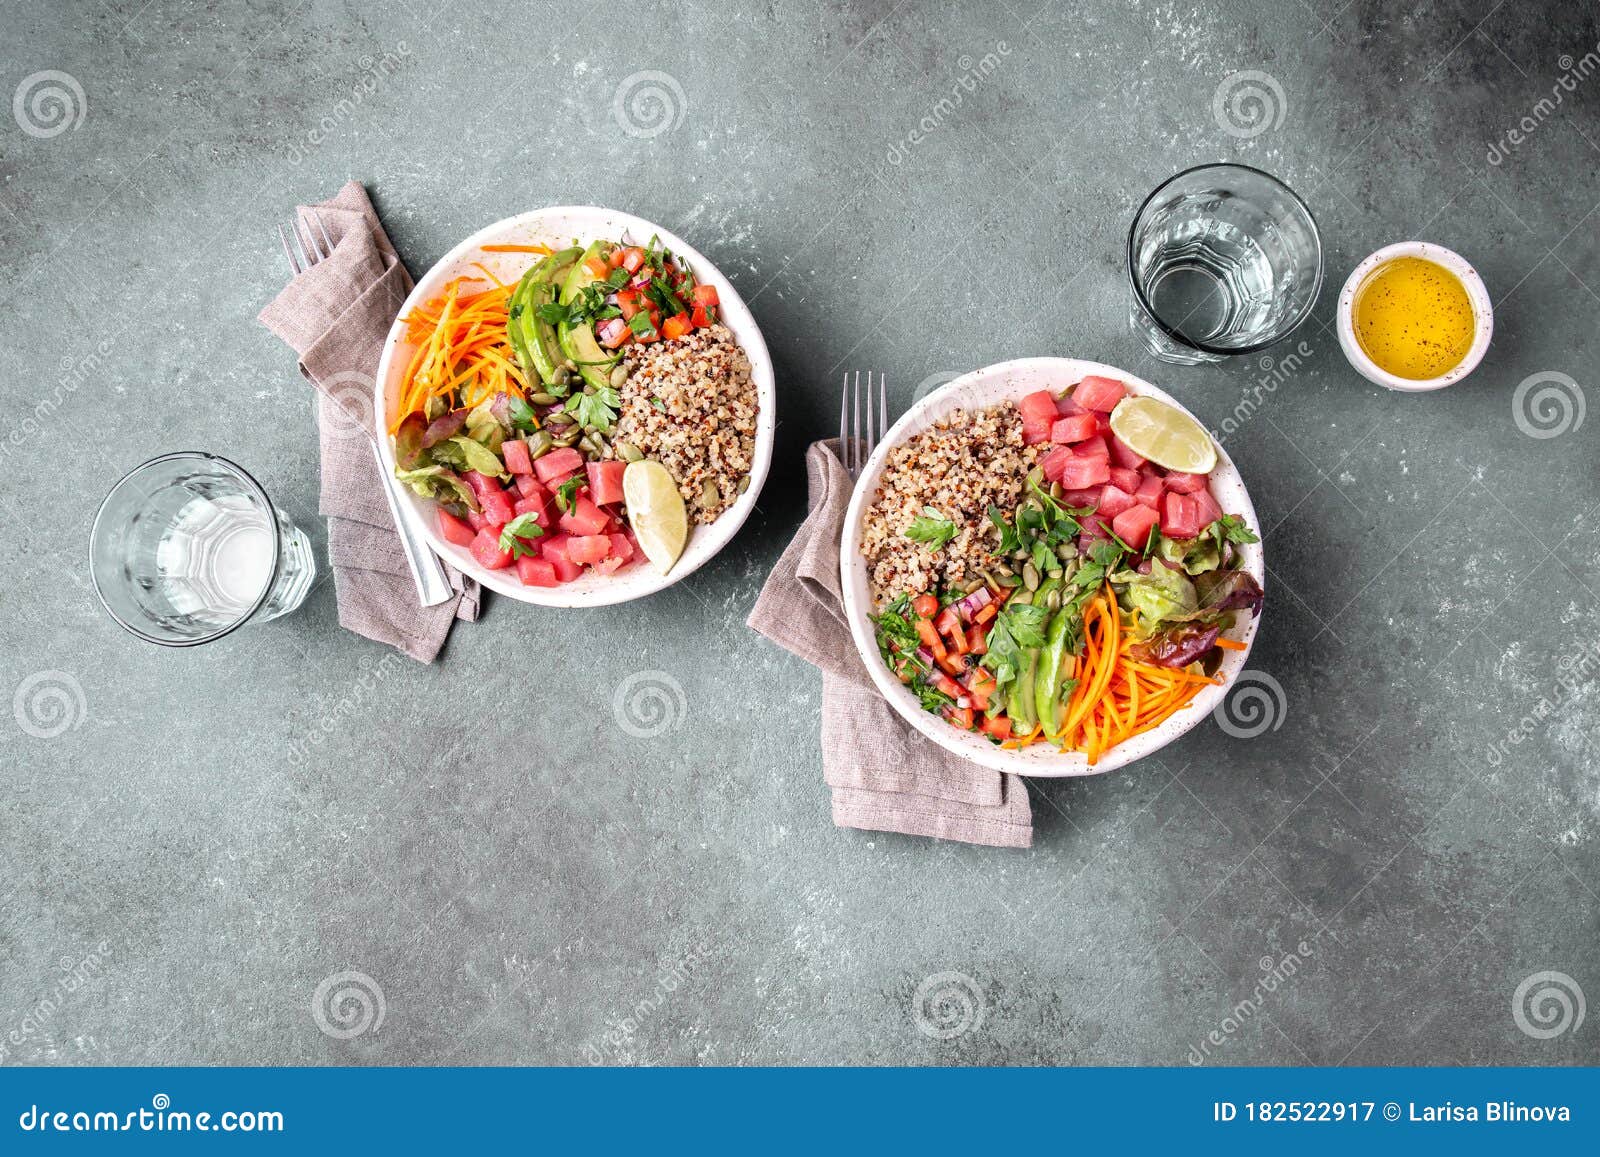 tuna poke bowl with quinoa and vegetales. budda bowl. quinua tuna salad on gray background